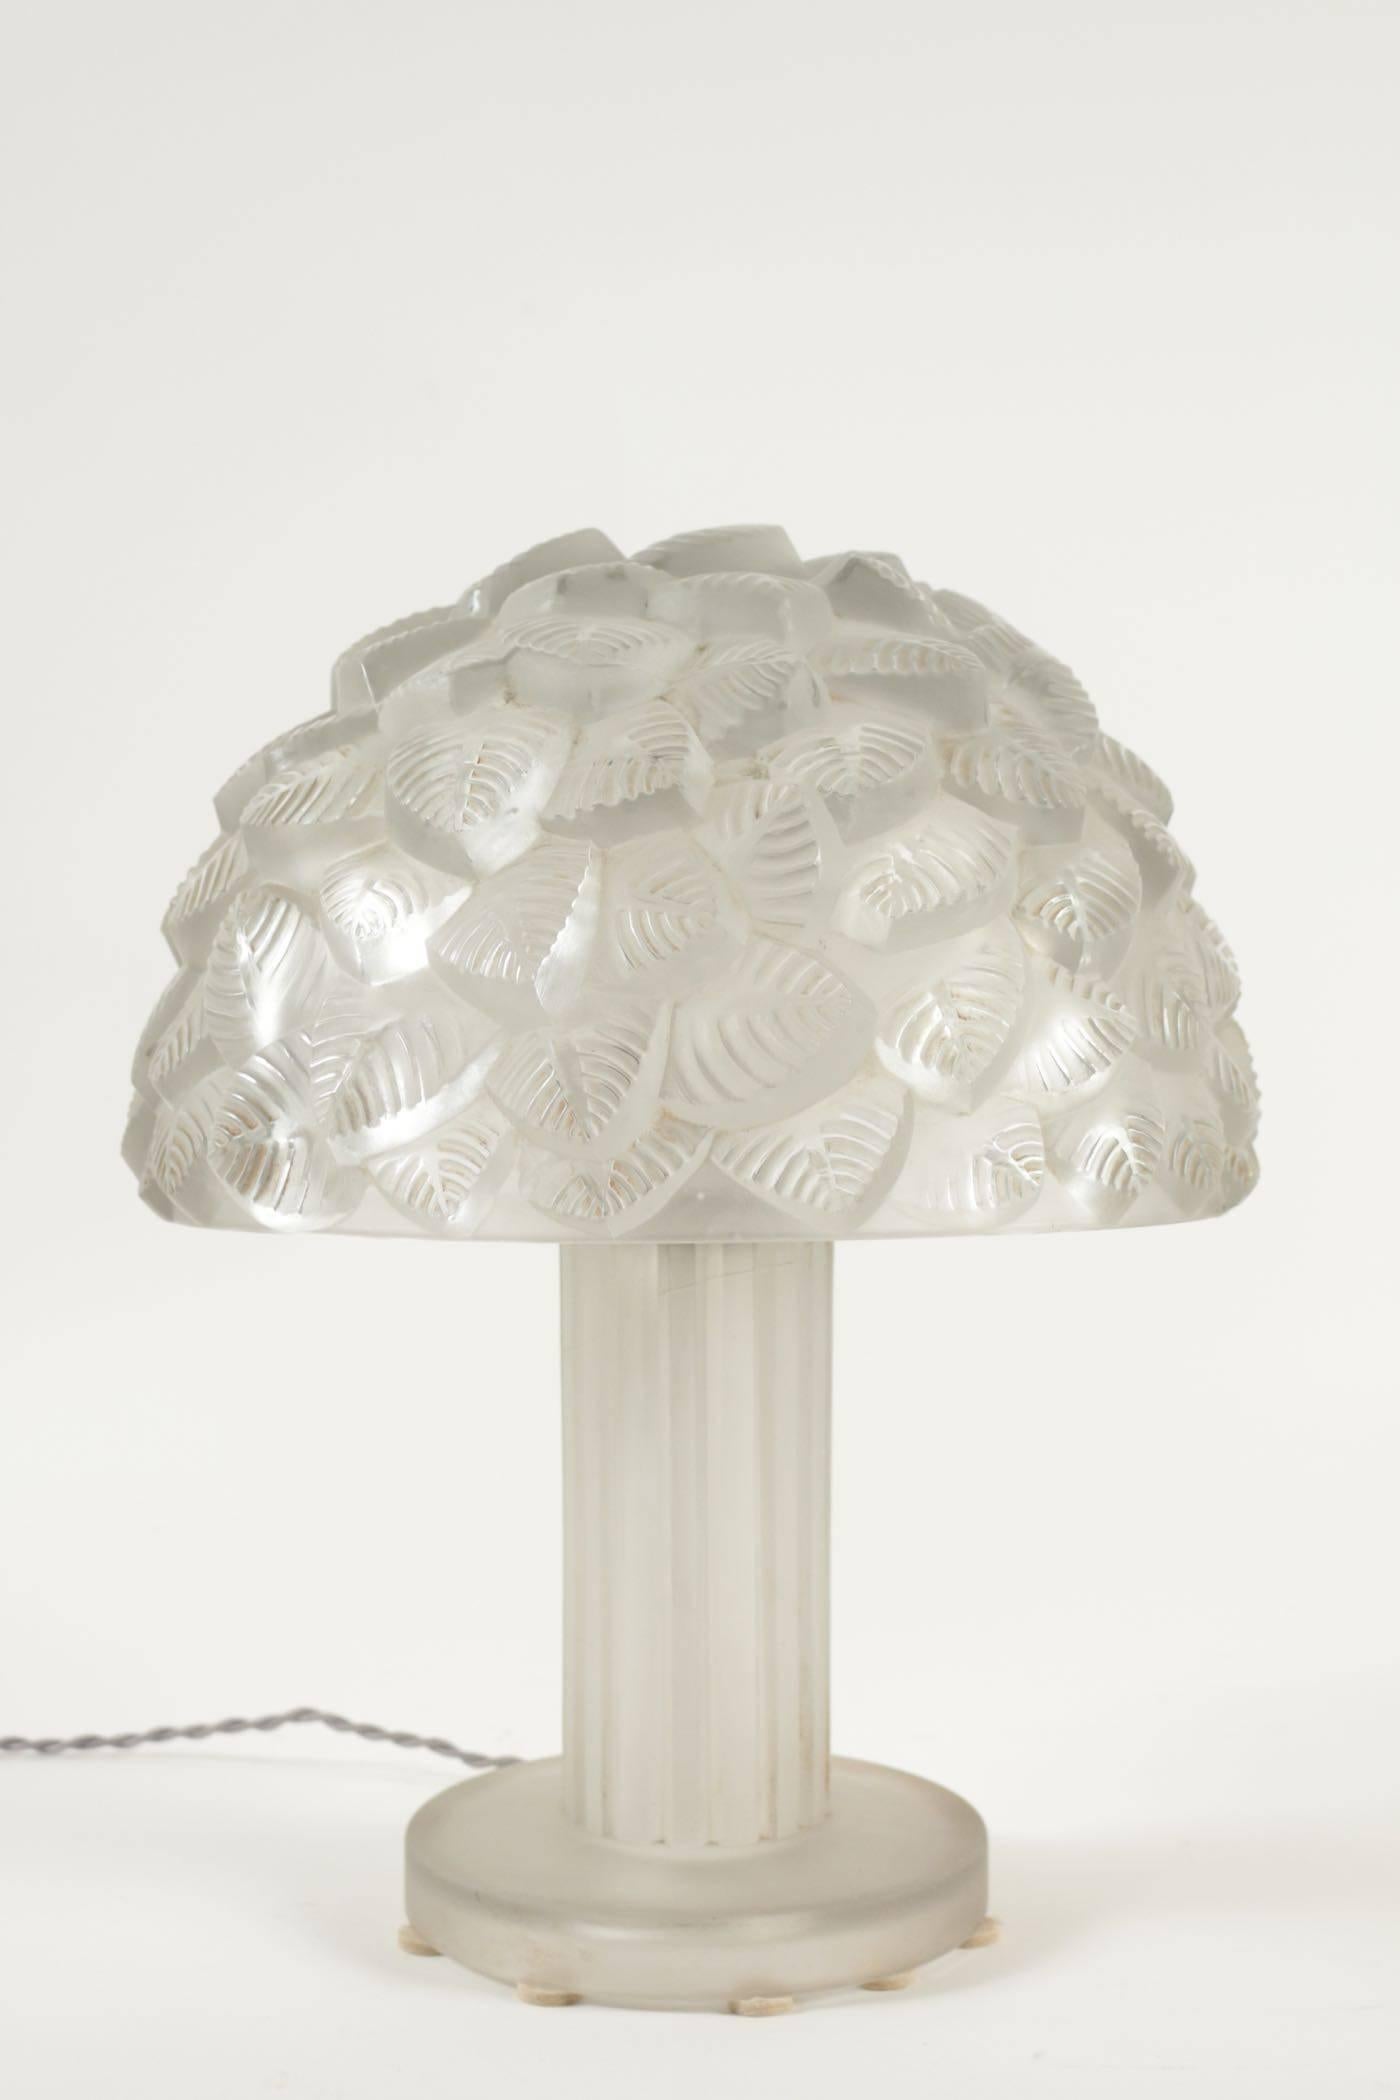 Rene Lalique lamp